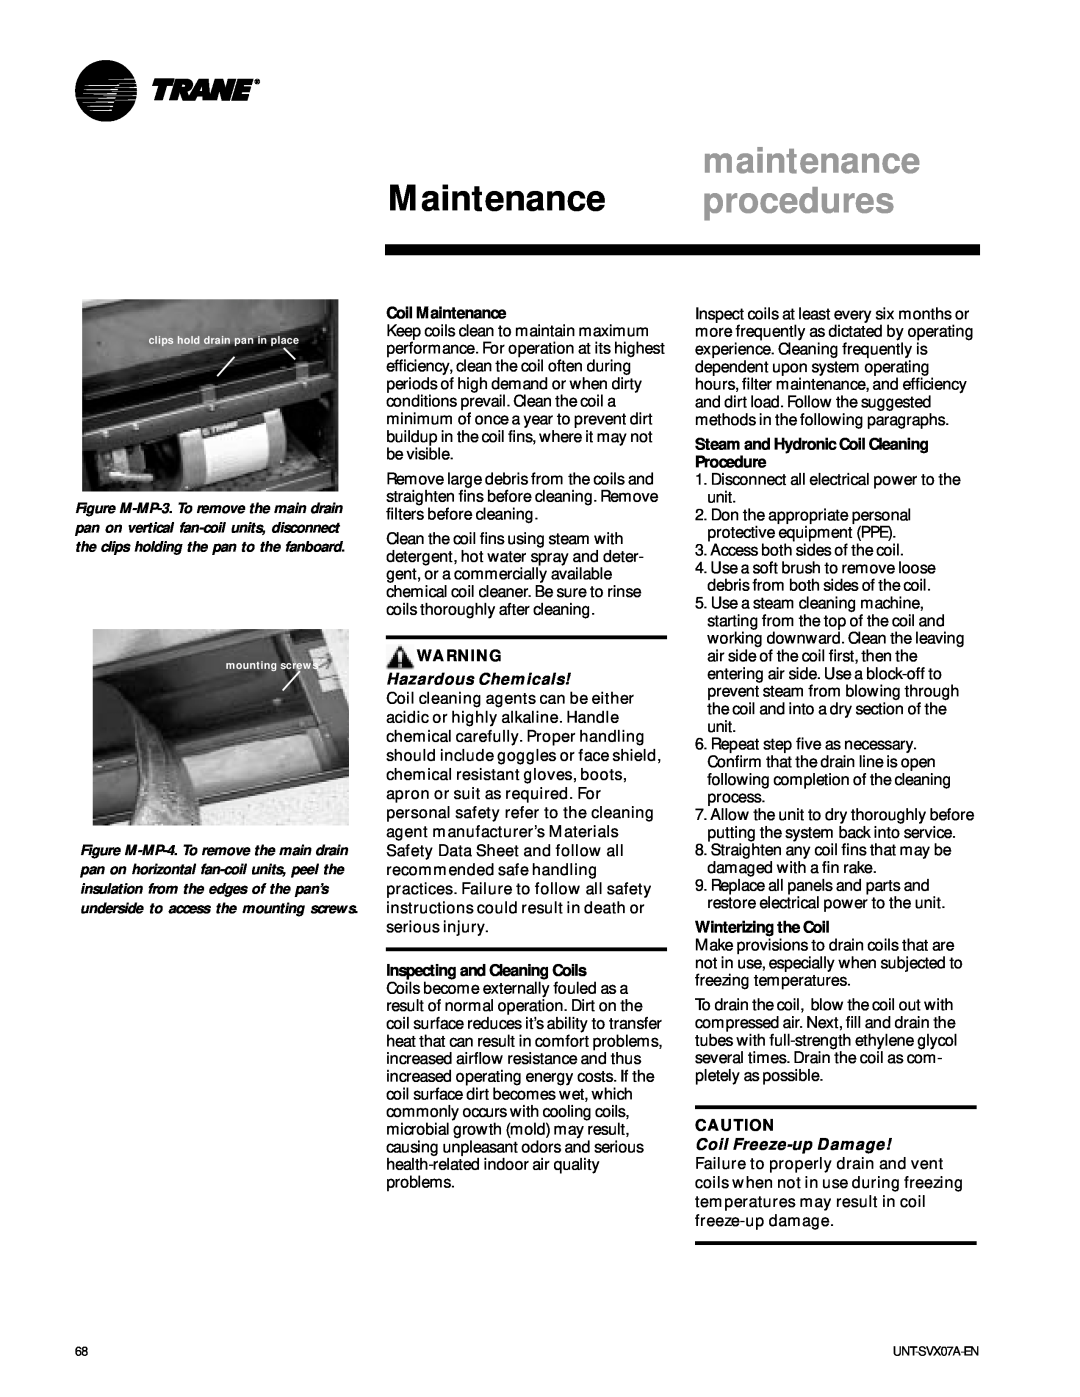 Trane UNT-SVX07A-EN maintenance, Maintenance procedures, Coil Maintenance, Steam and Hydronic Coil Cleaning Procedure 